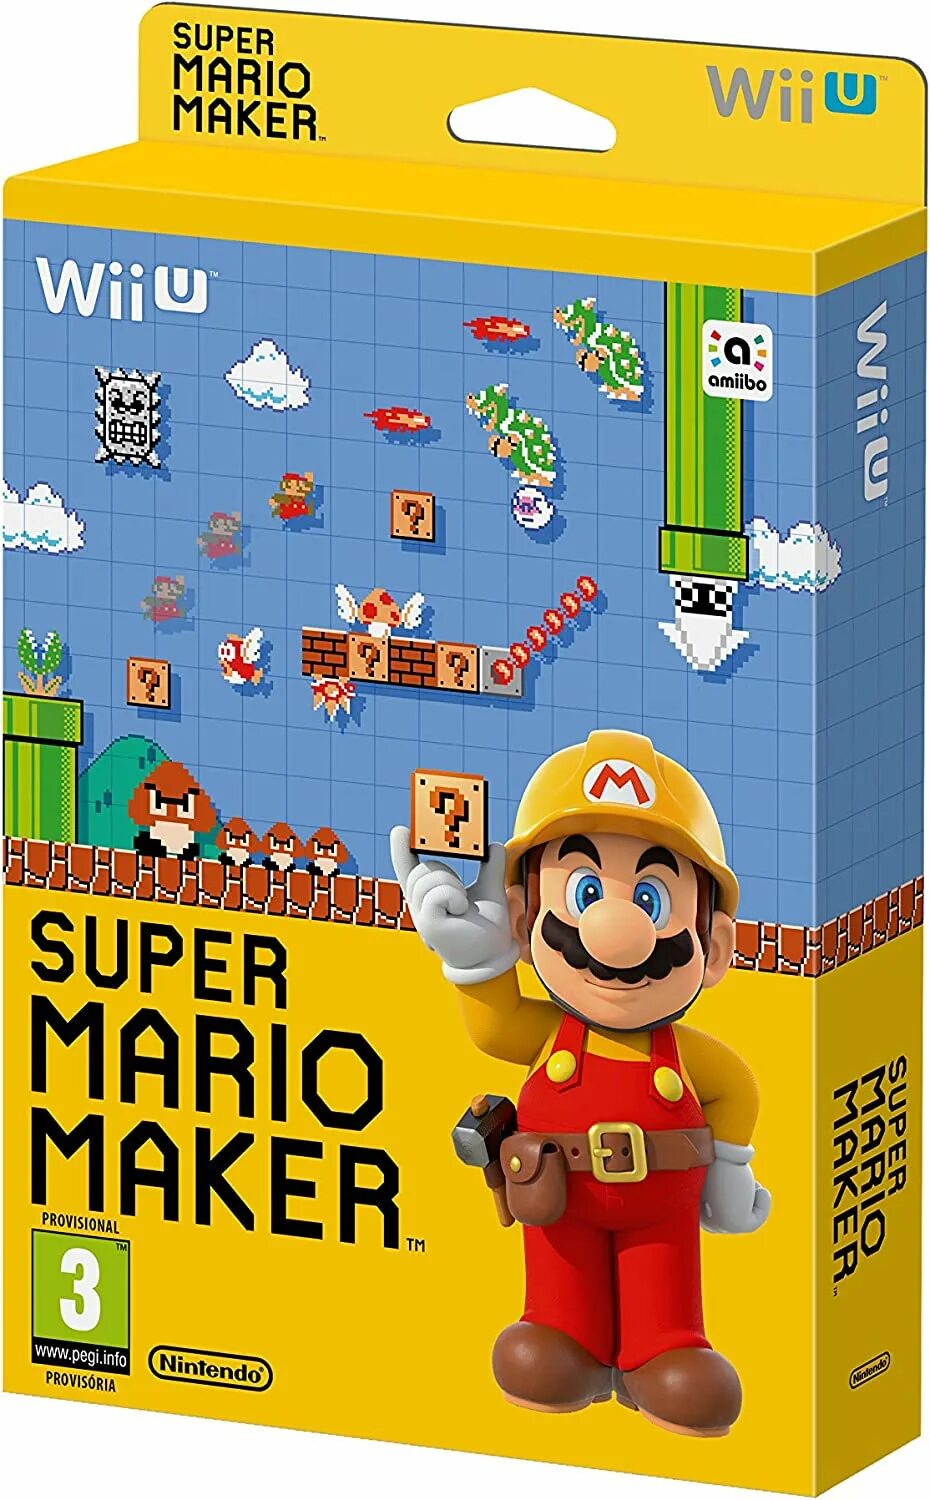 Super Mario maker Nintendo Wii u. Super Mario maker диск Nintendo Wii u. Super Mario maker 2. Super Mario maker + artbook. Mario maker wii